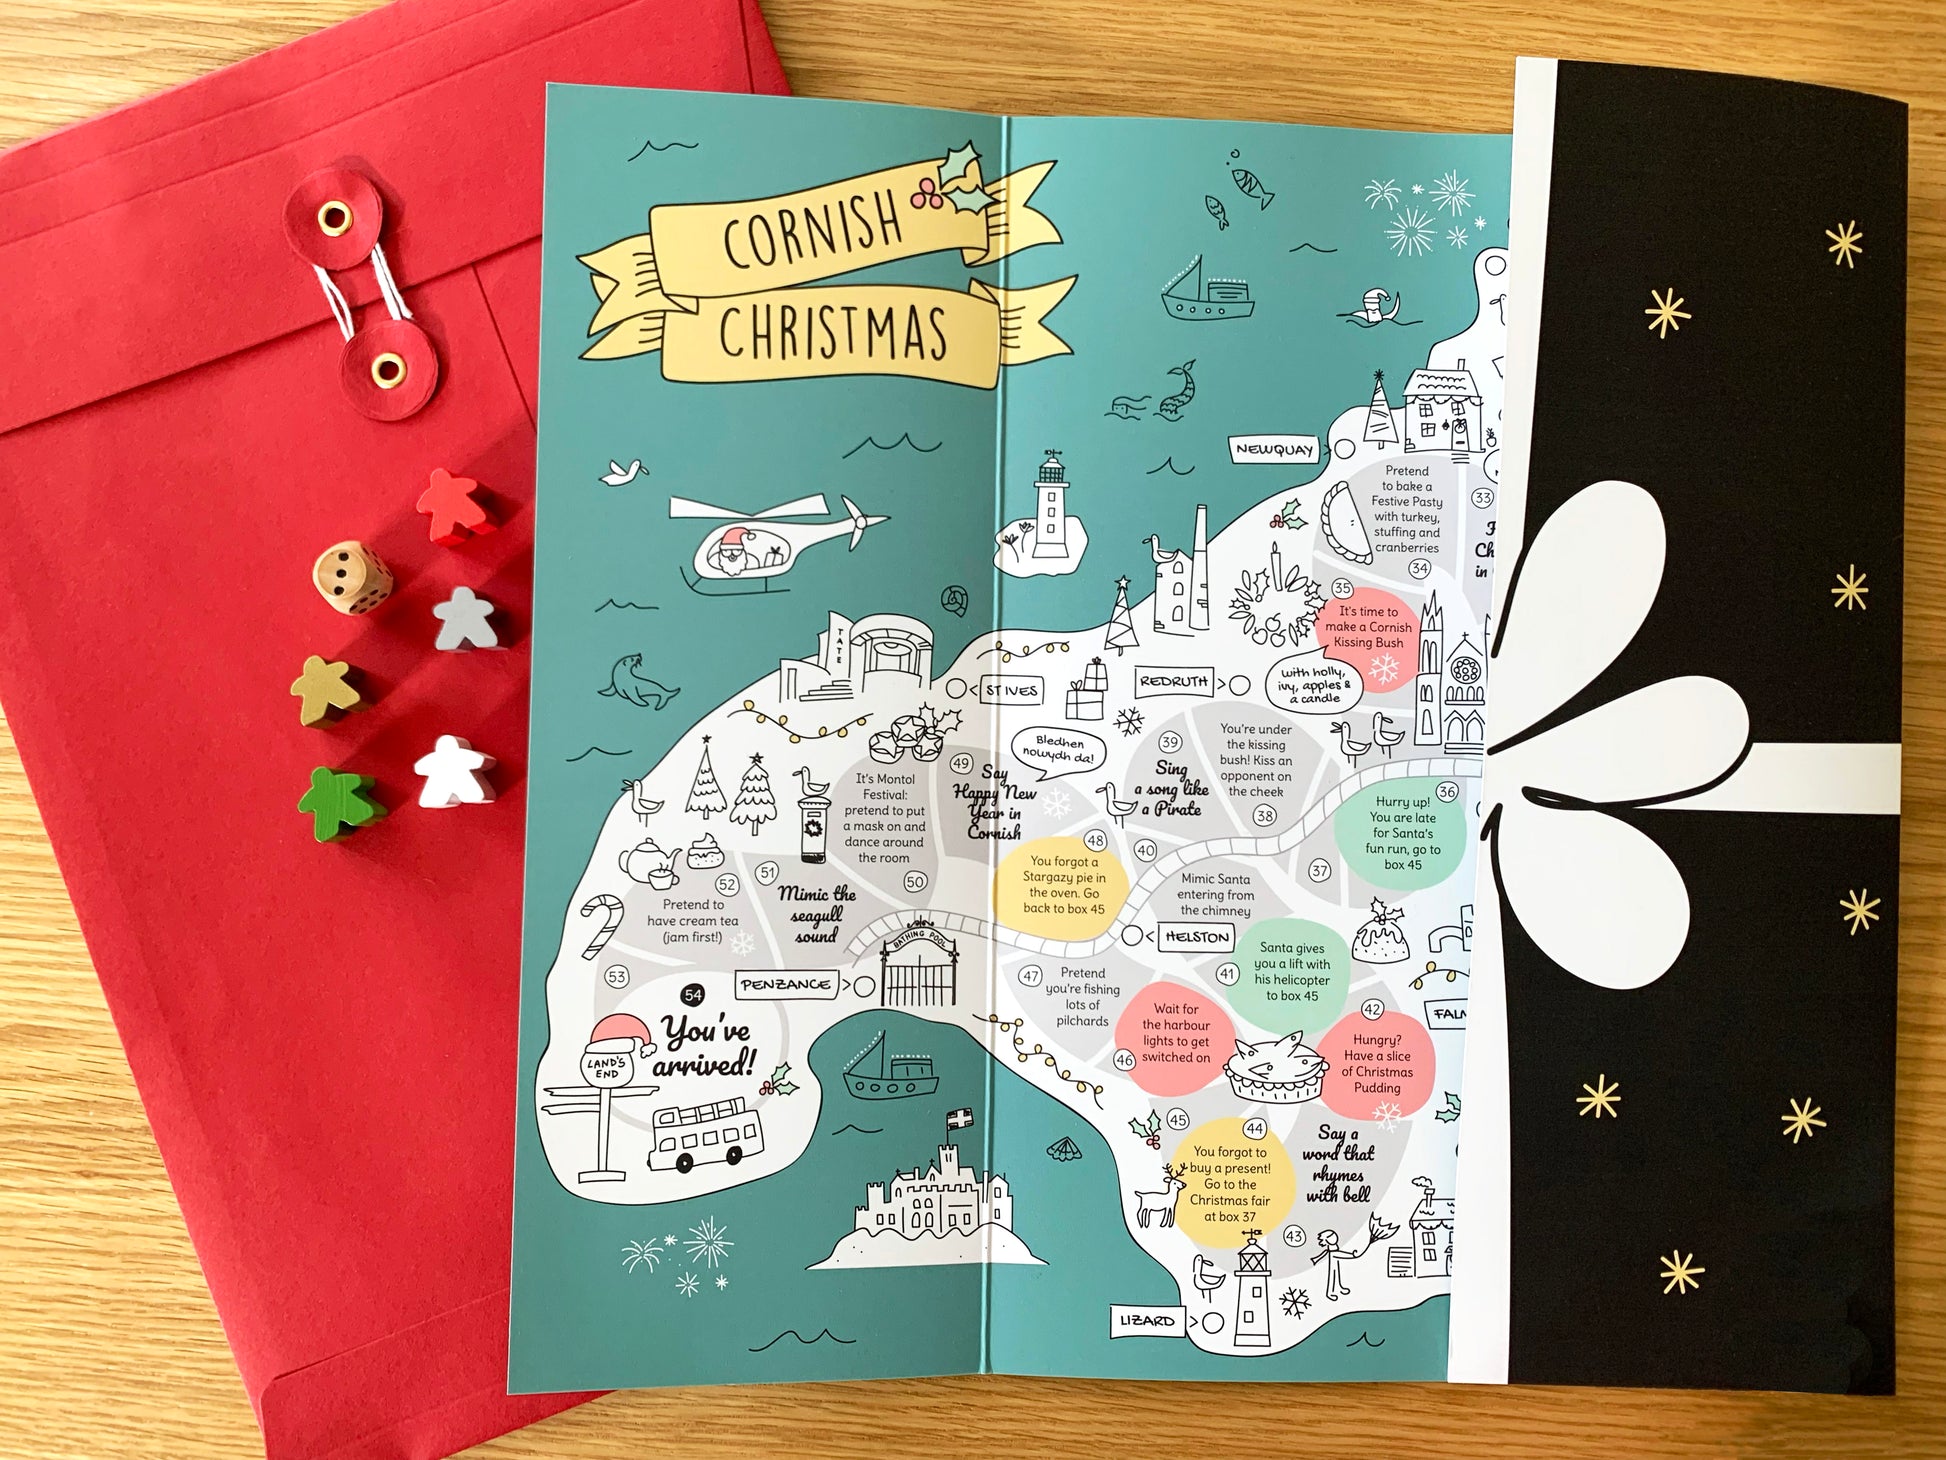 Cornwall Christmas board game pack